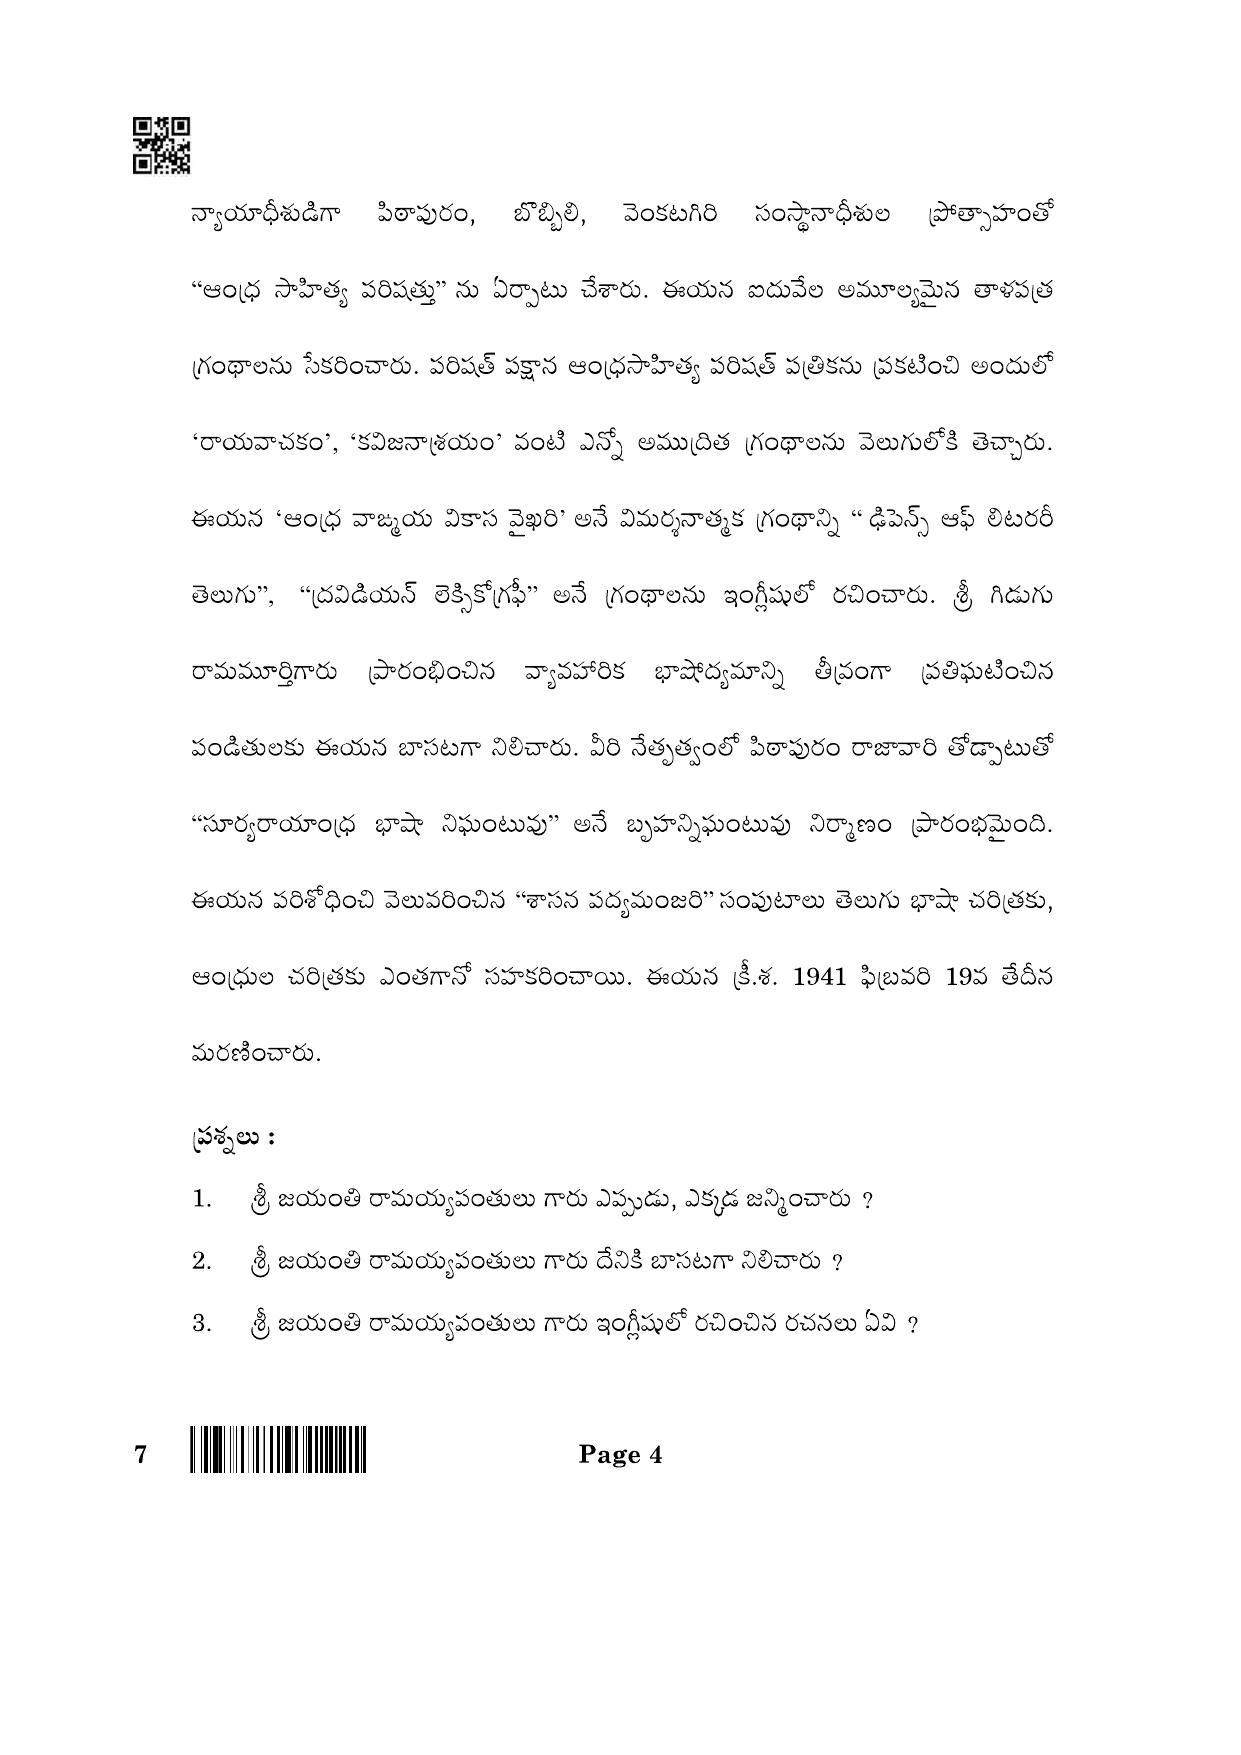 CBSE Class 12 7_Telugu 2022 Question Paper - Page 4